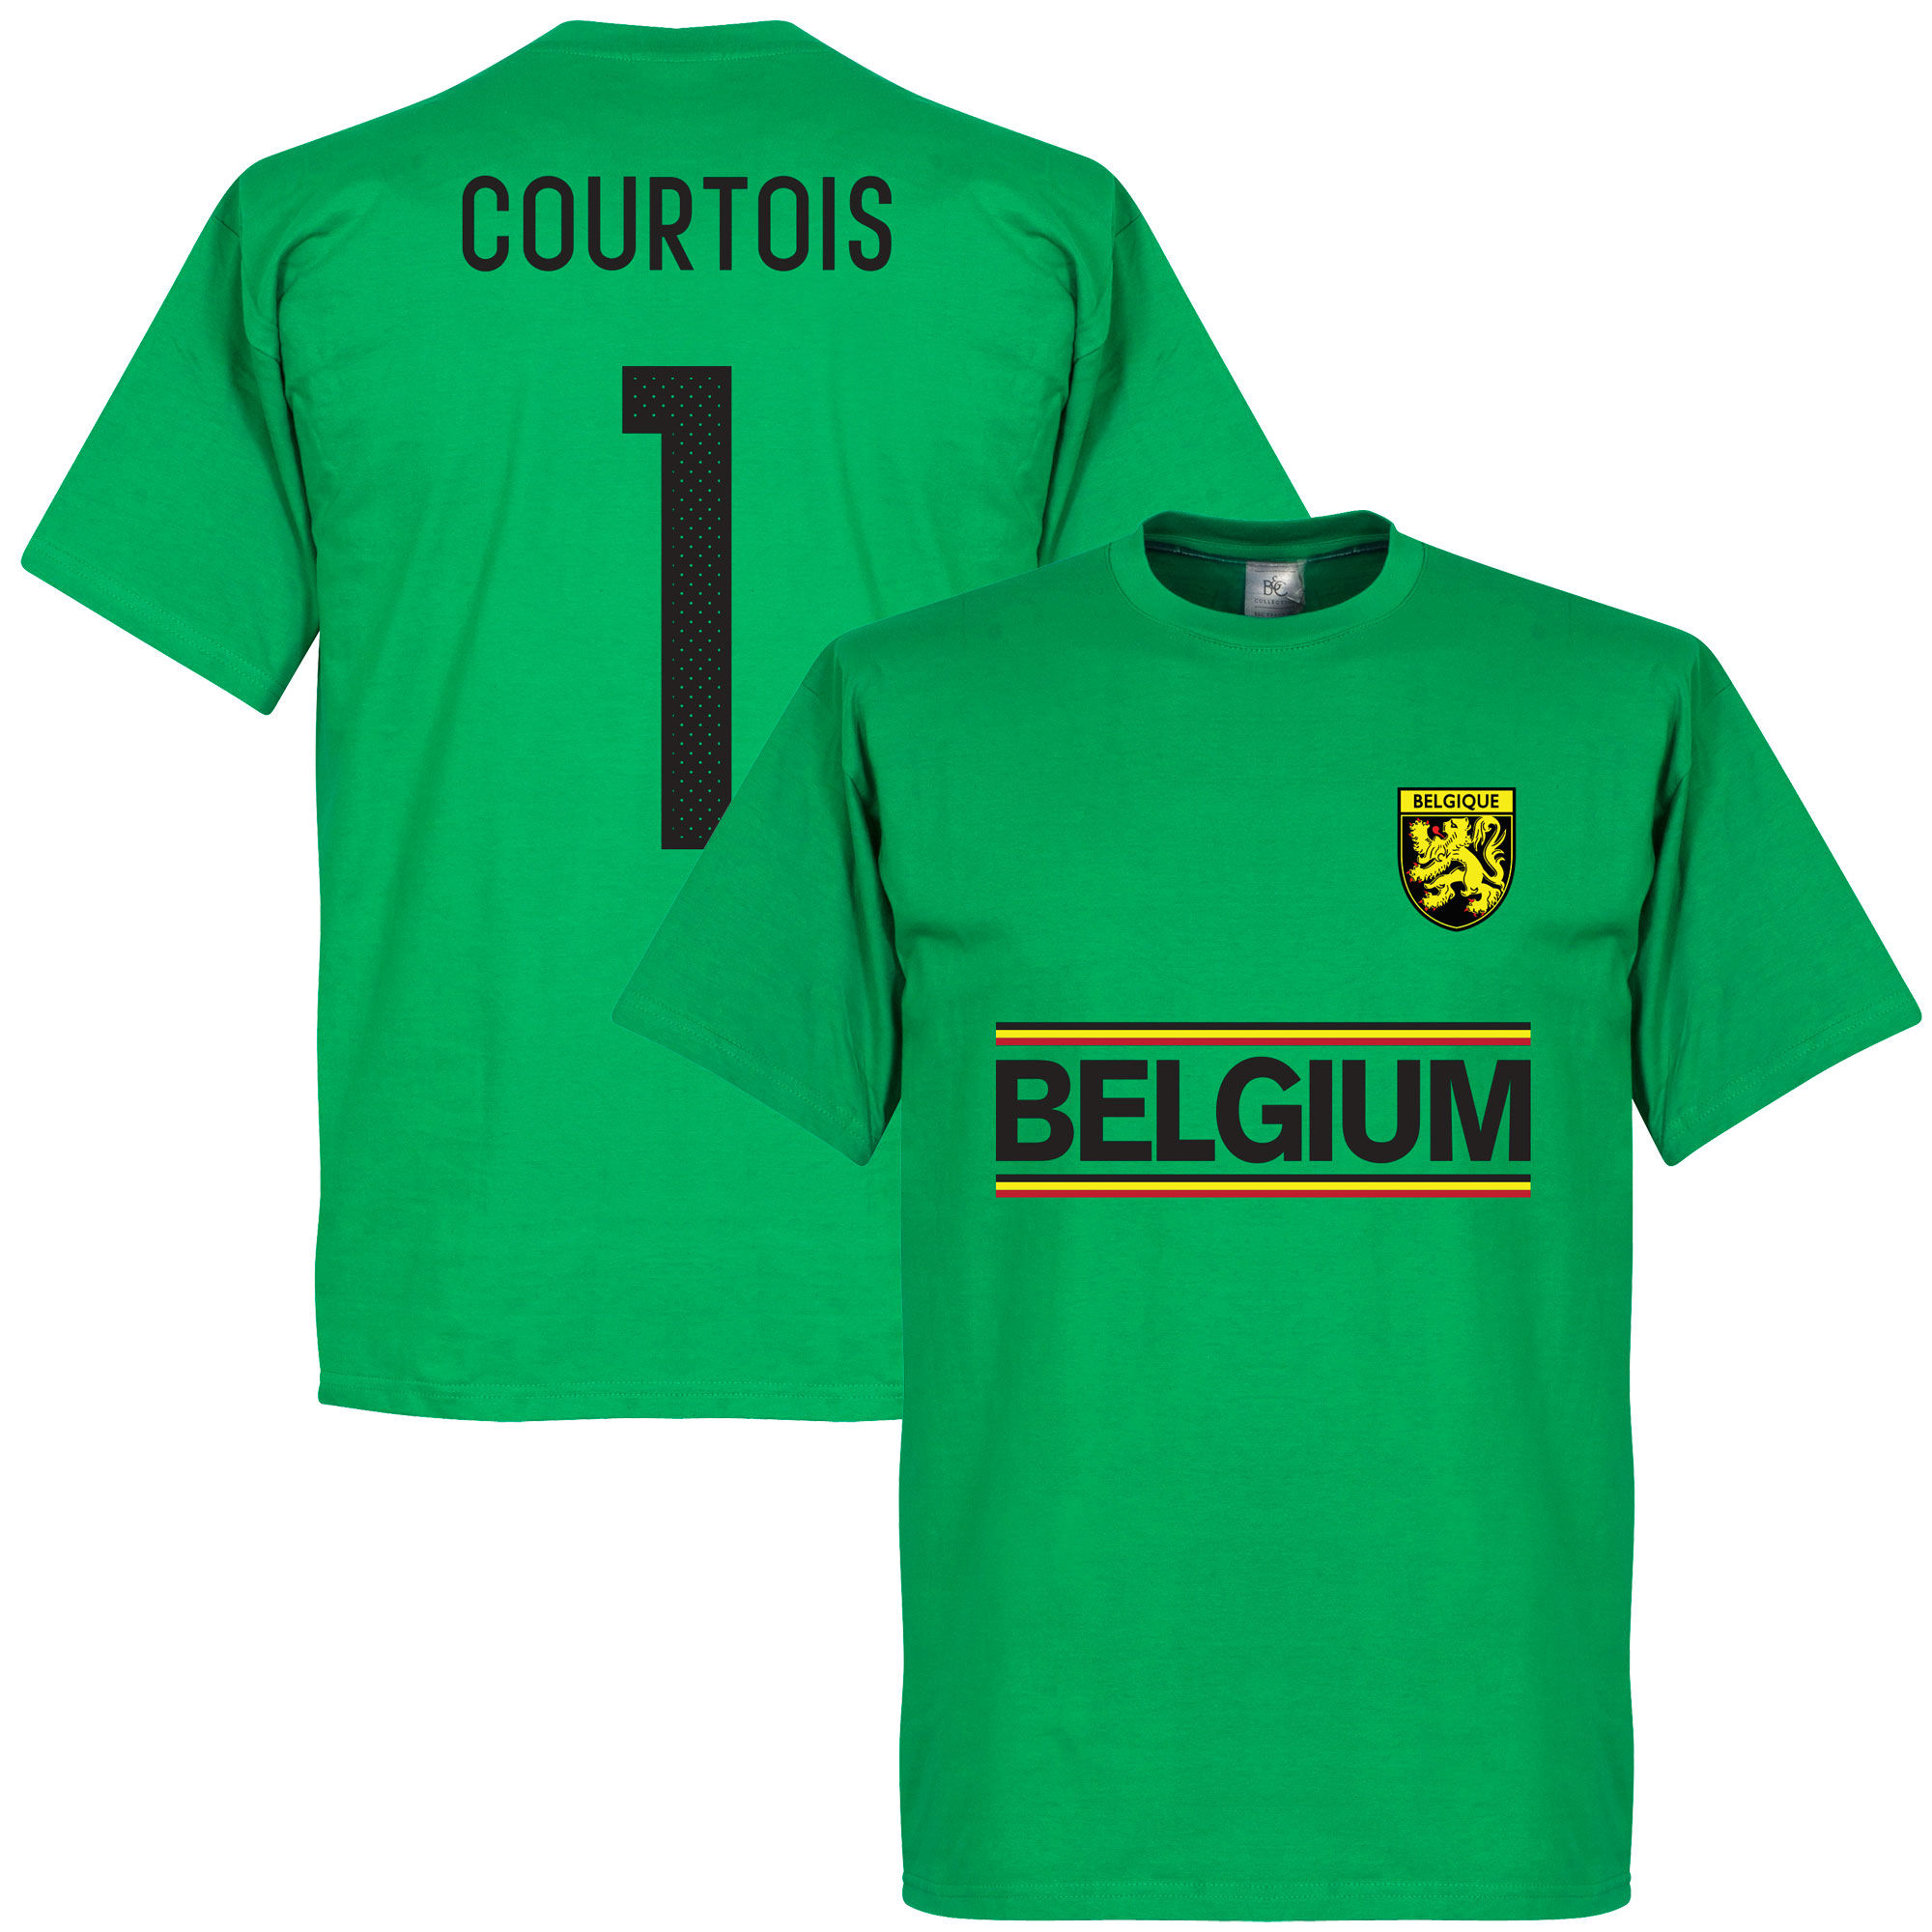 Belgium No1 Courtois Green Goalkeeper Soccer Country Jersey